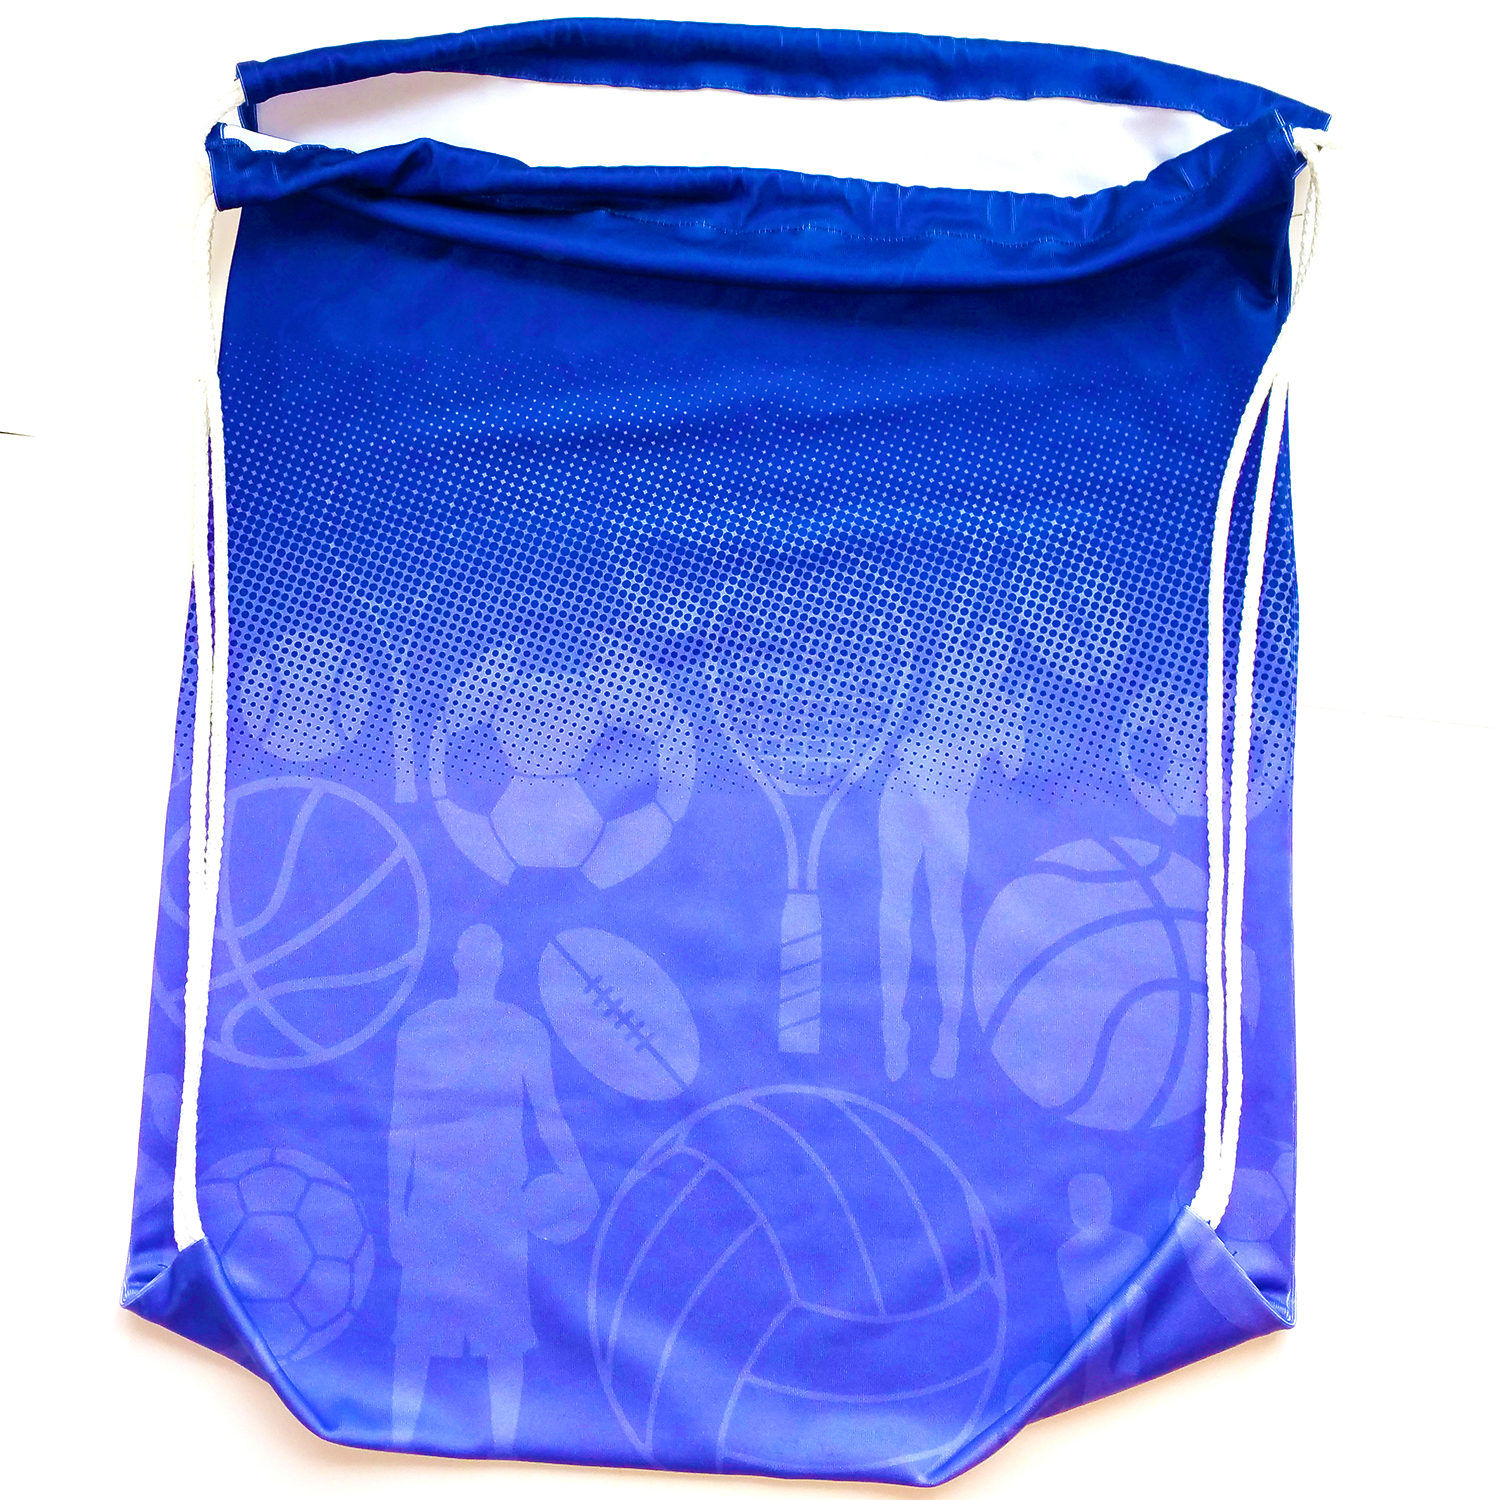 Stretchy Spandex Gym bags printed full colour